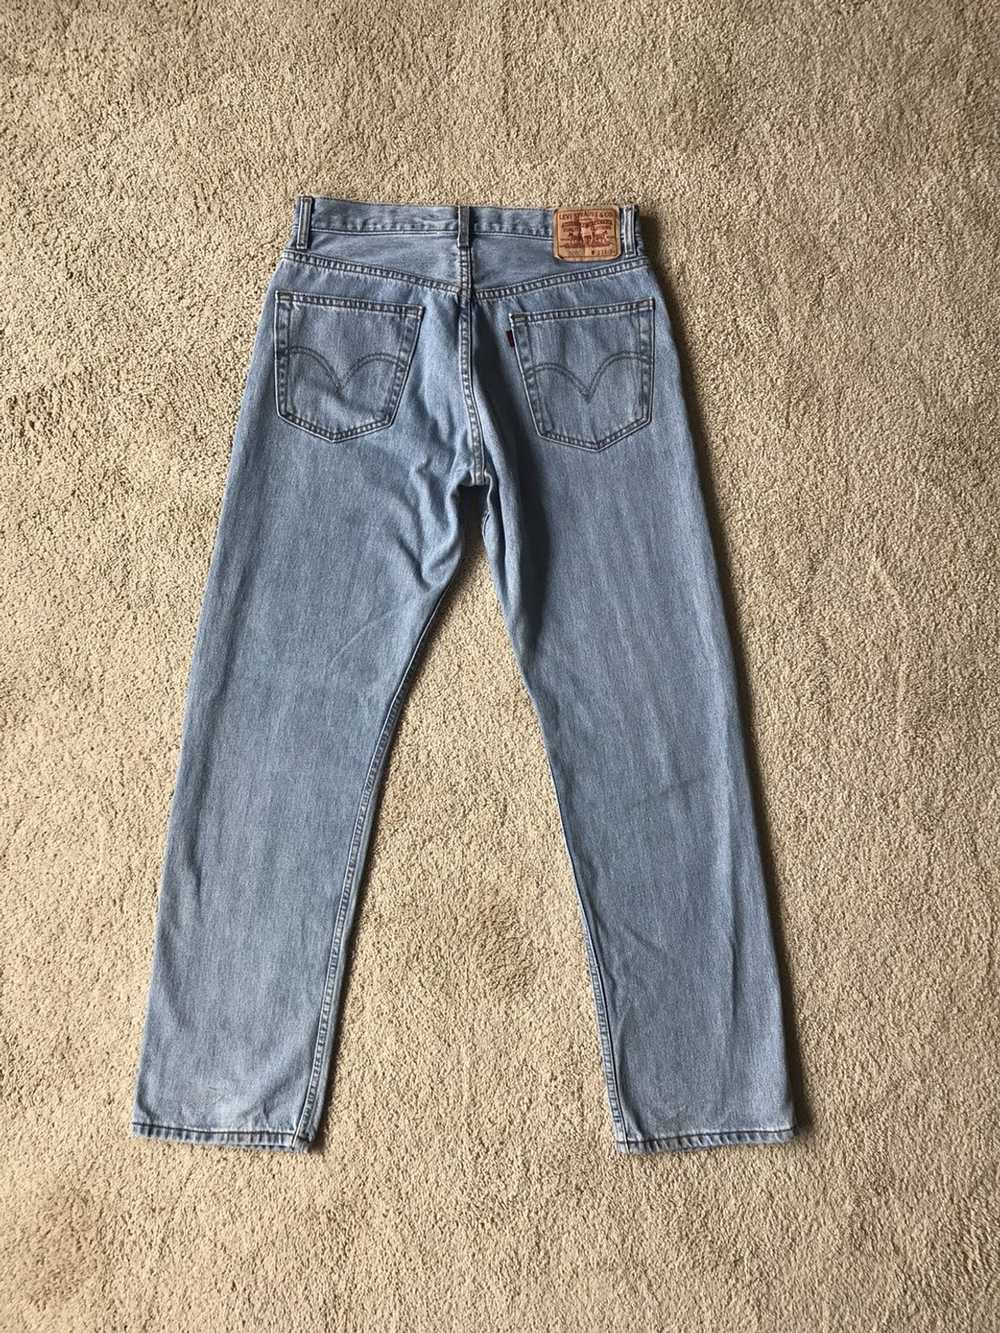 Levi's Levi’s 505 regular fit denim jeans - image 2